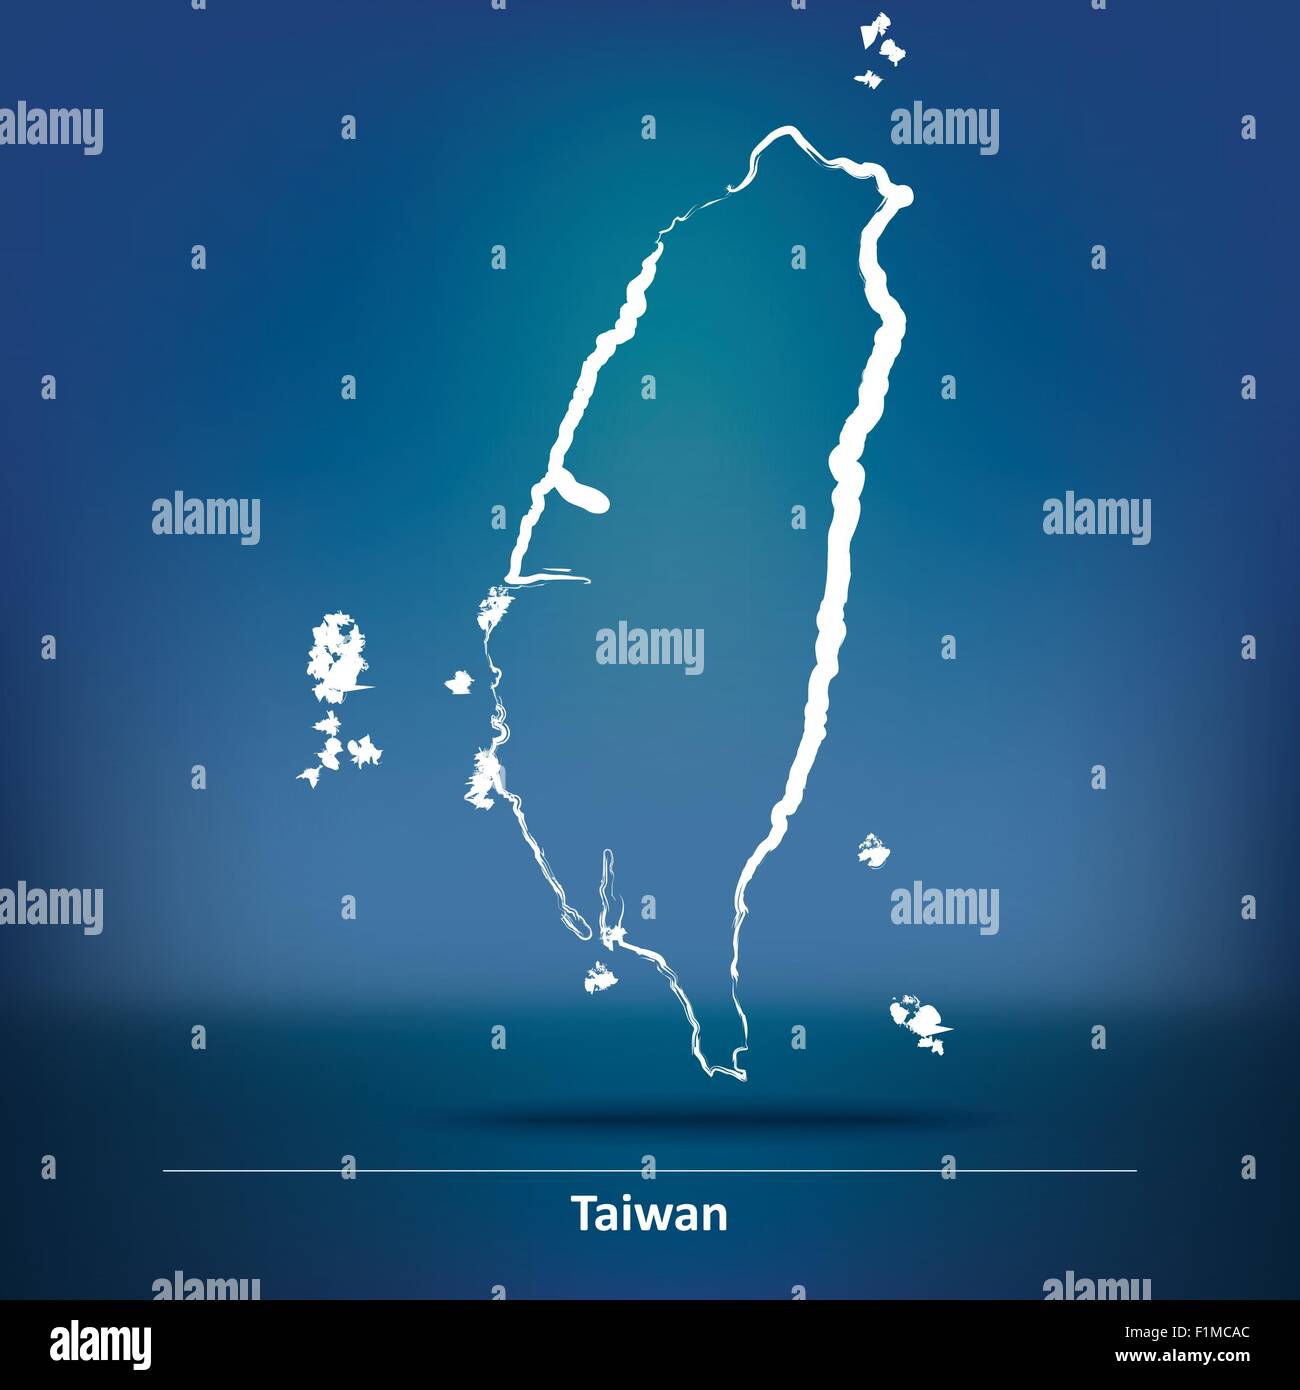 Landkarte von Taiwan - Vektor-Illustration Doodle Stock Vektor